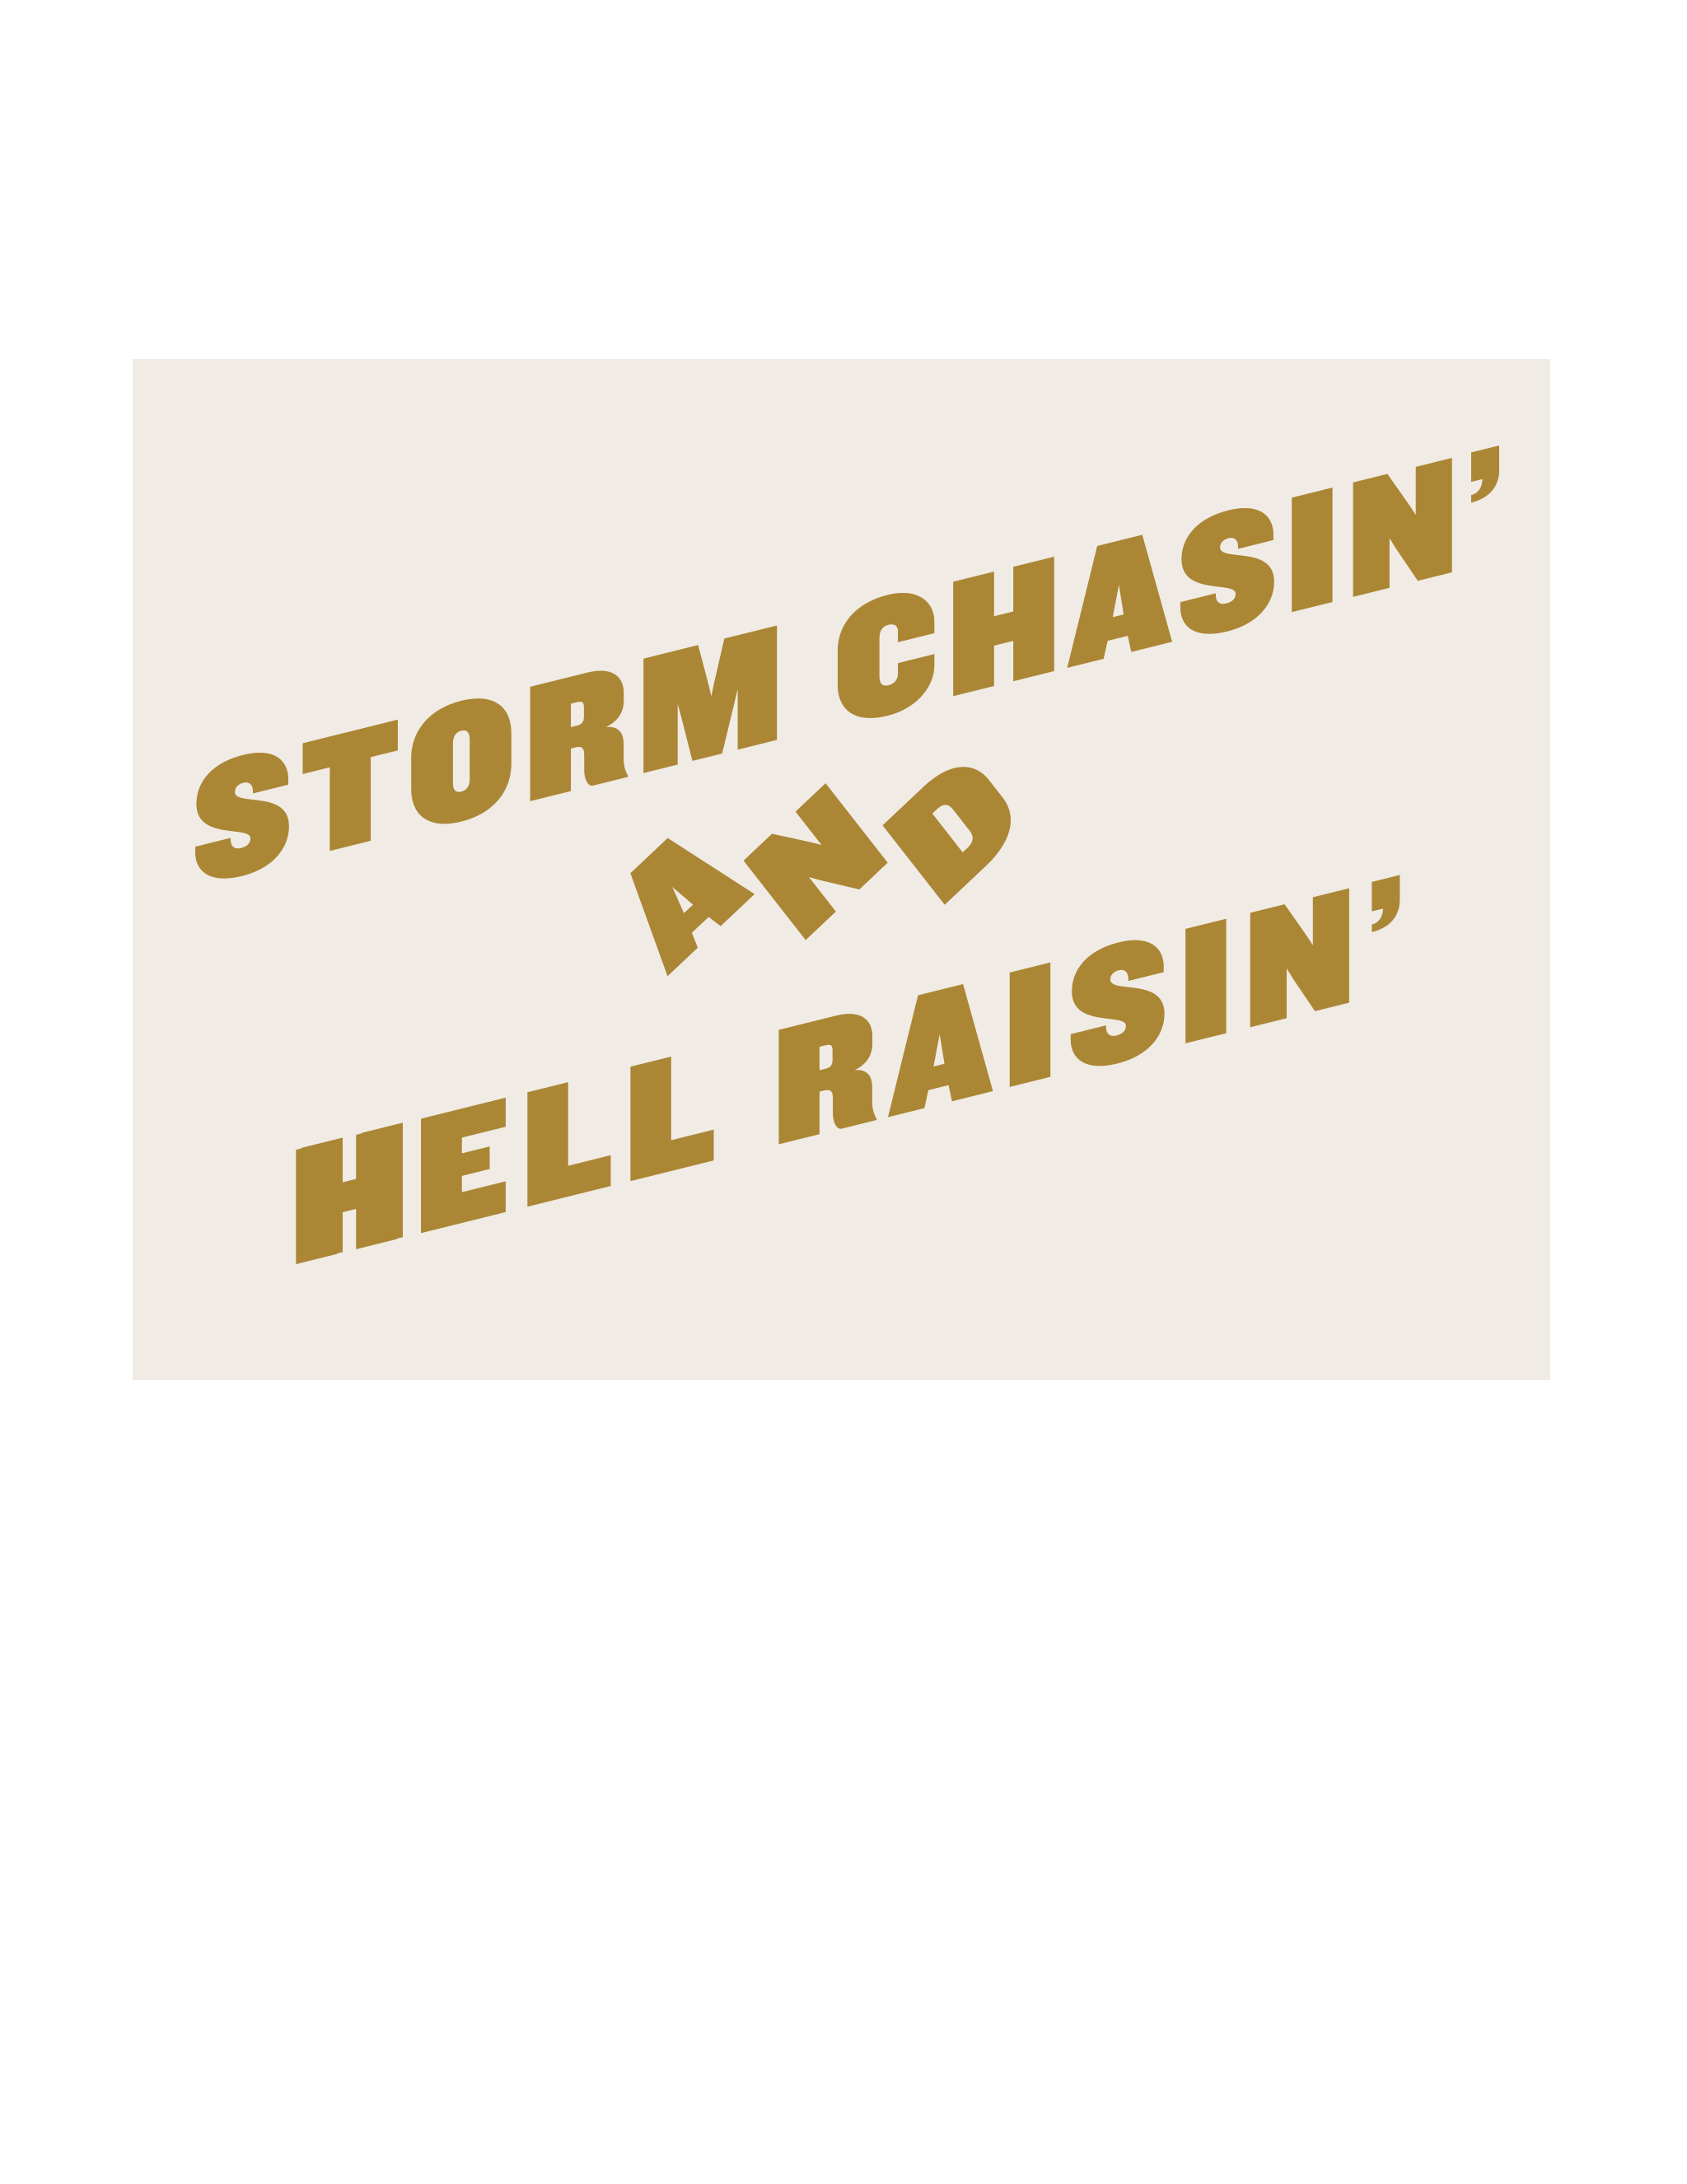 Category 10 Nashville Storm Chasin T-Shirt